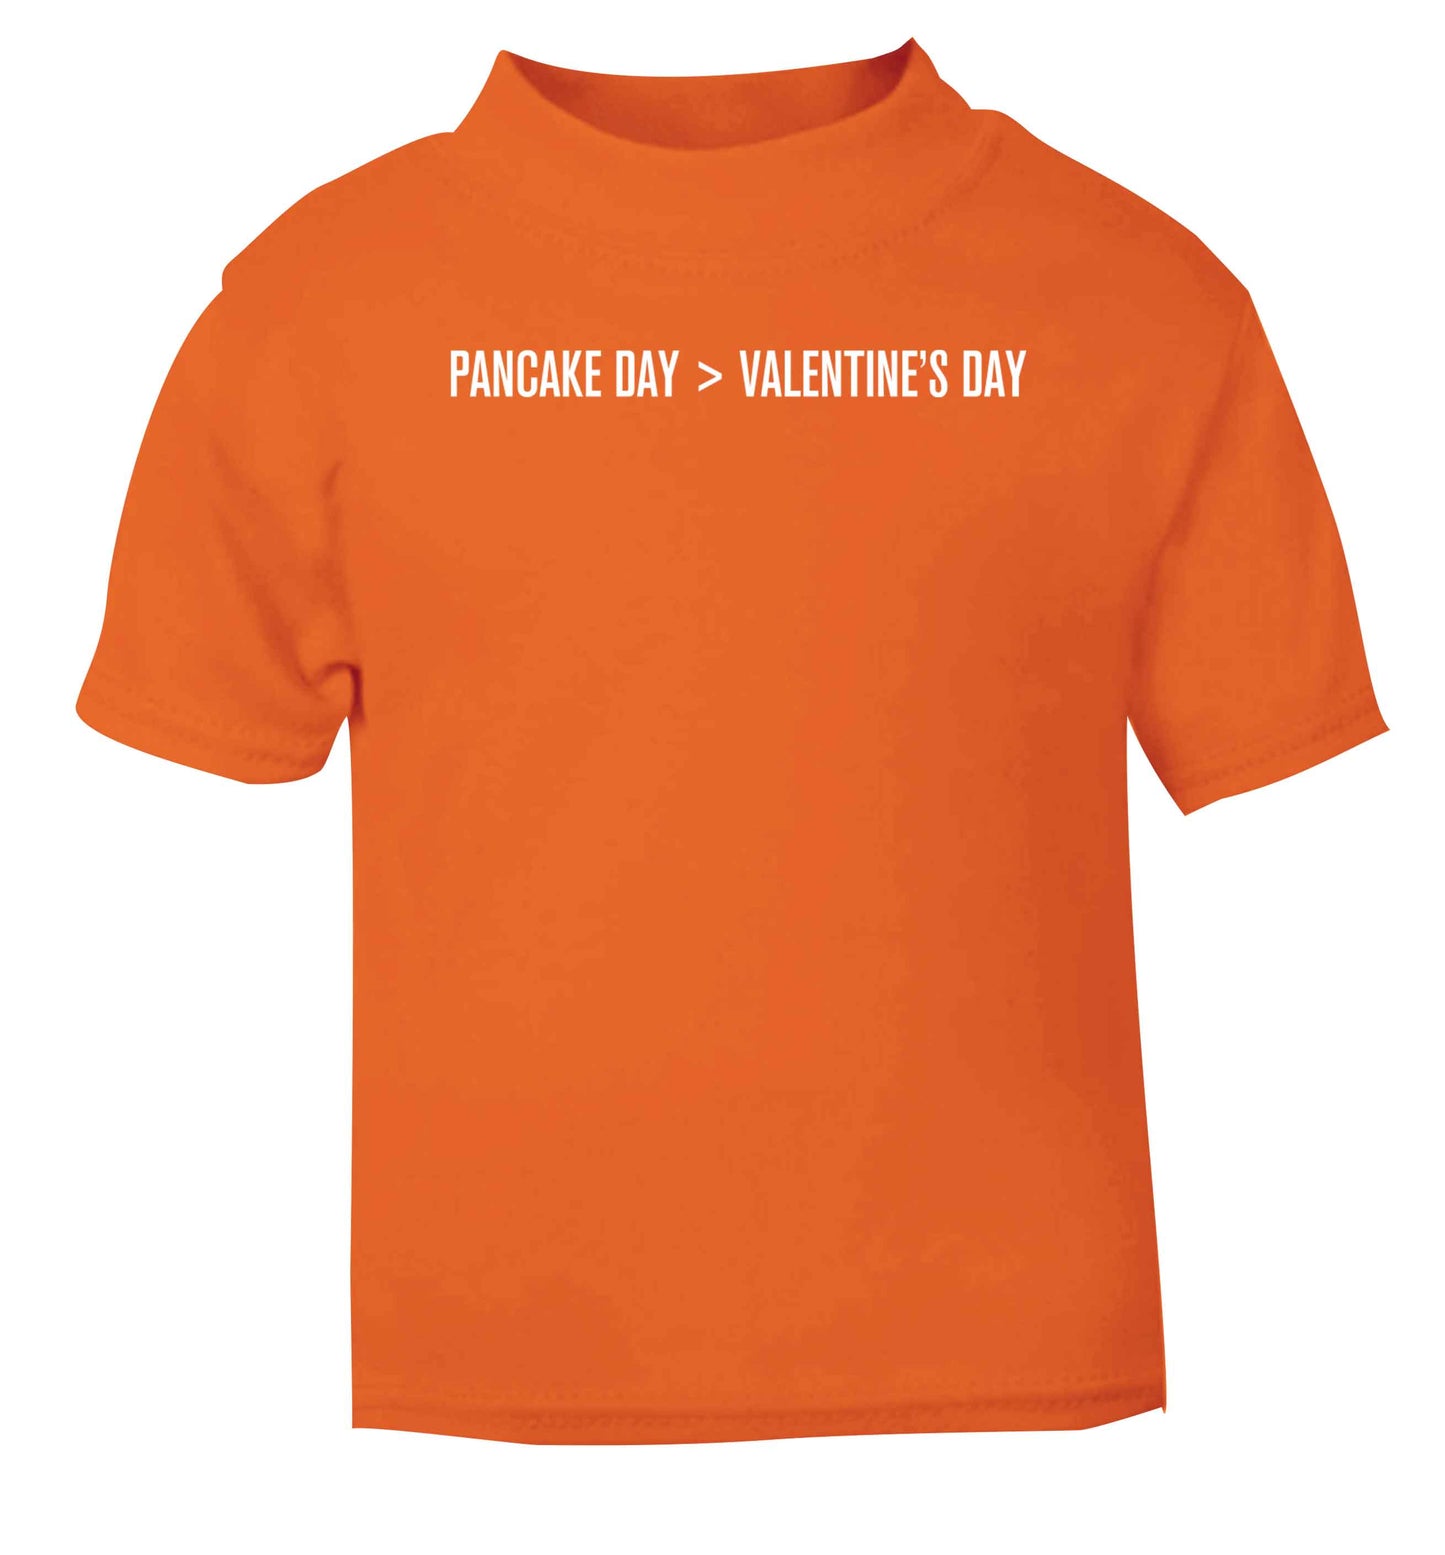 Pancake day > valentines day orange baby toddler Tshirt 2 Years